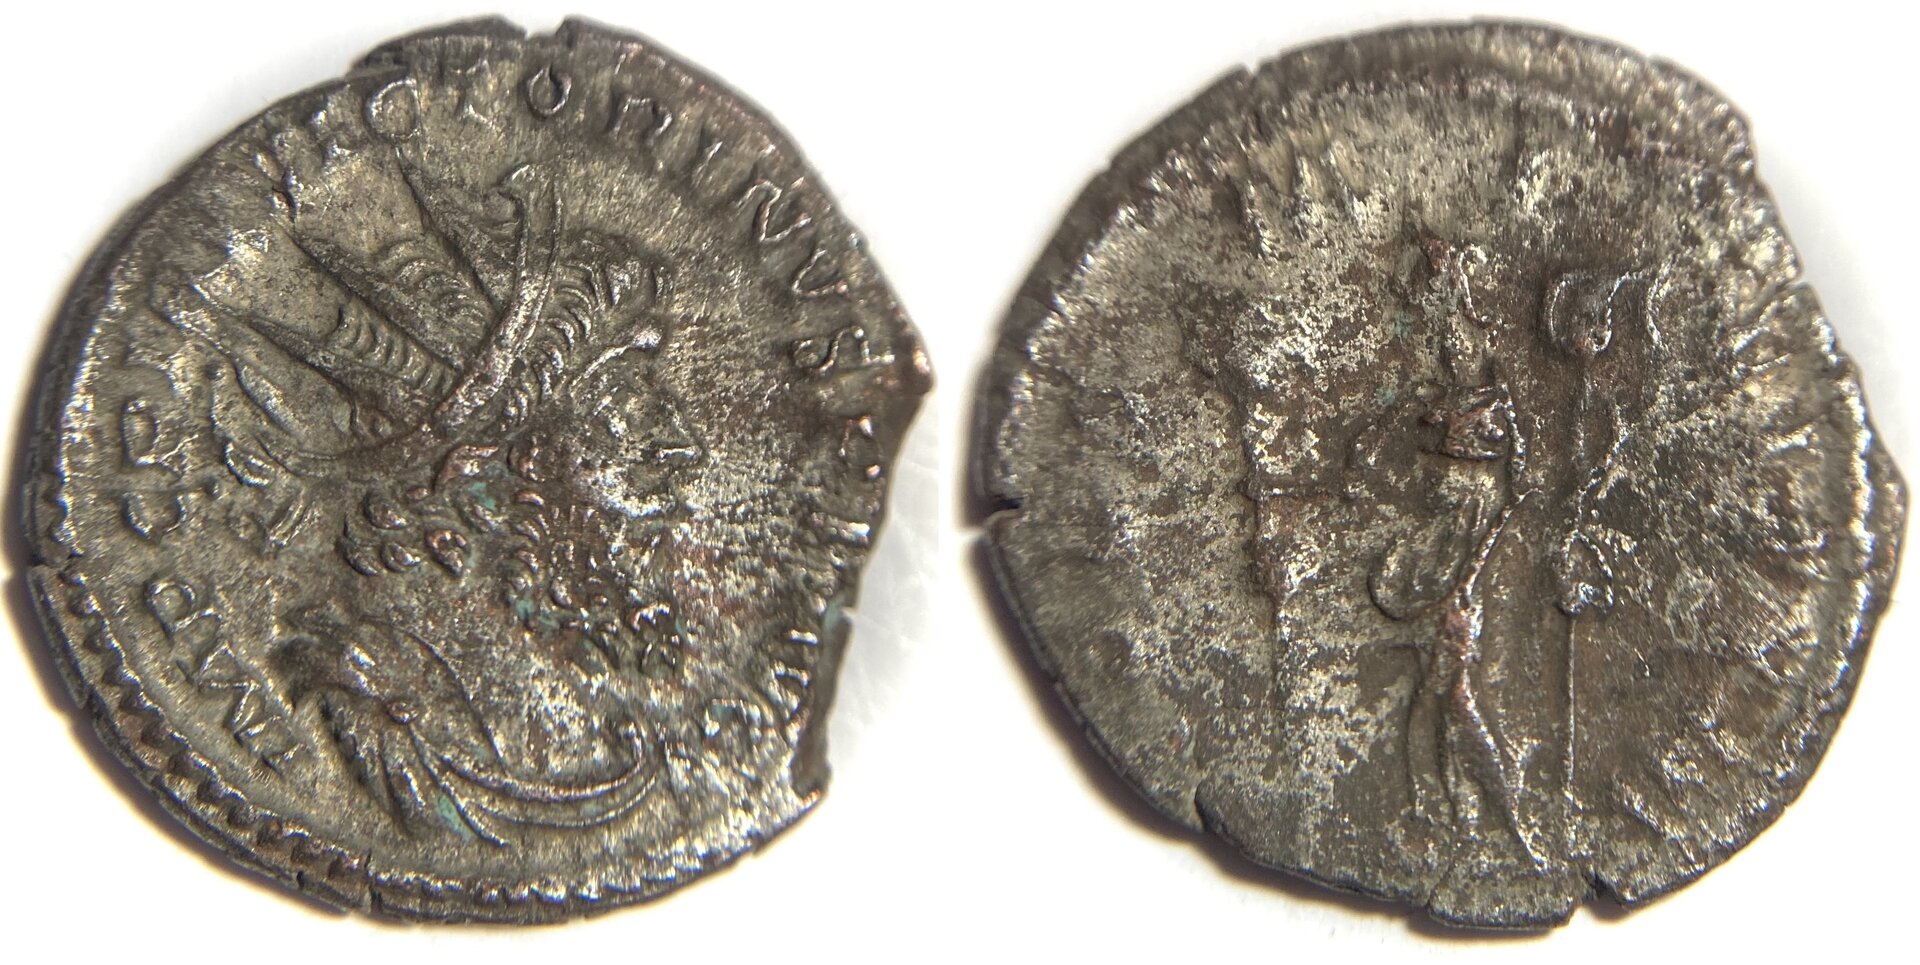 Victorninus RIC 109 silvered.JPG